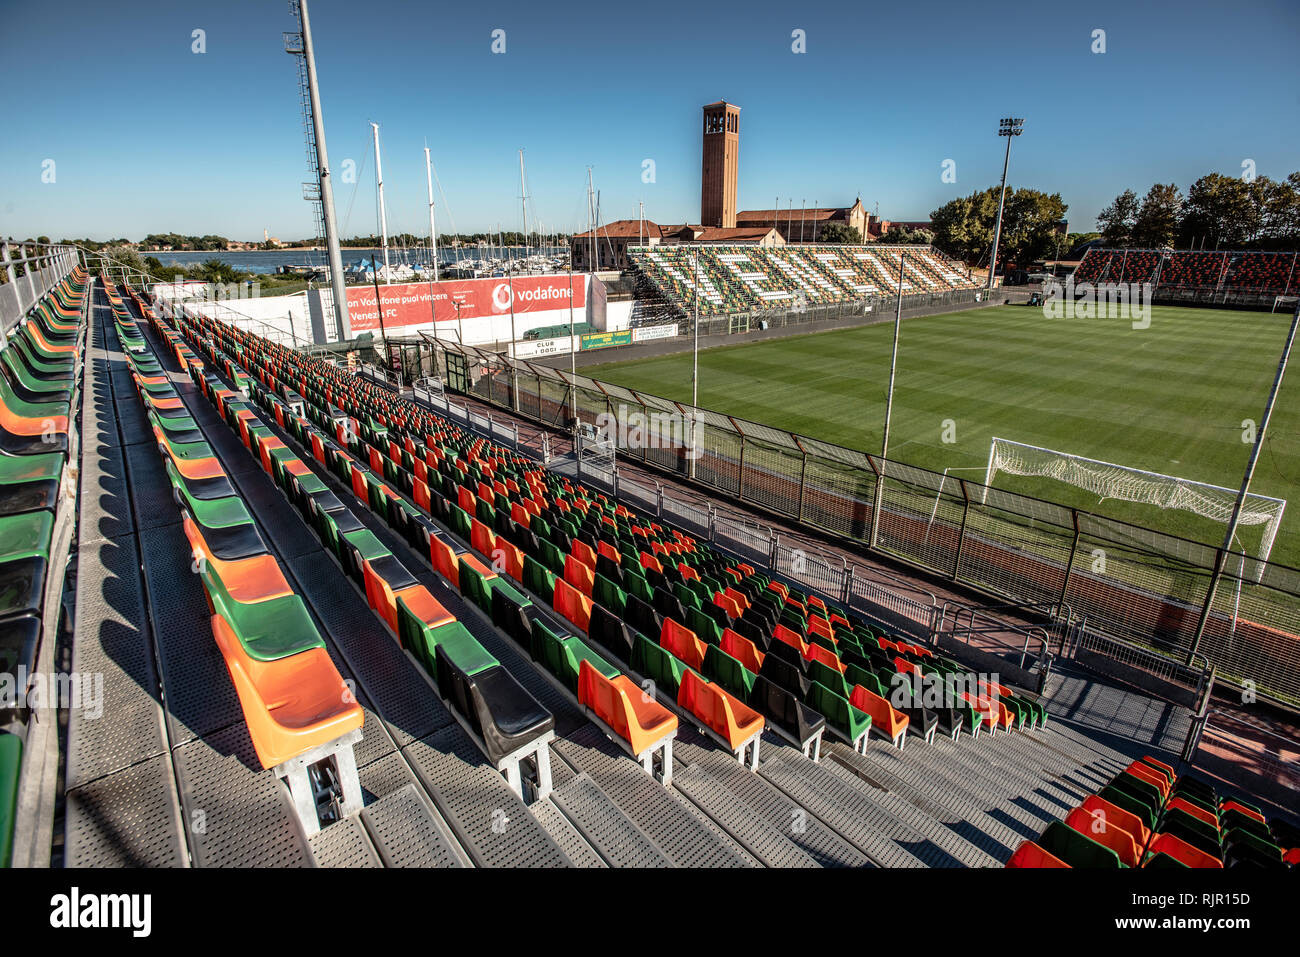 Stadio Pierluigi Penzo. Venezia Football Club S.r.l Foto stock - Alamy